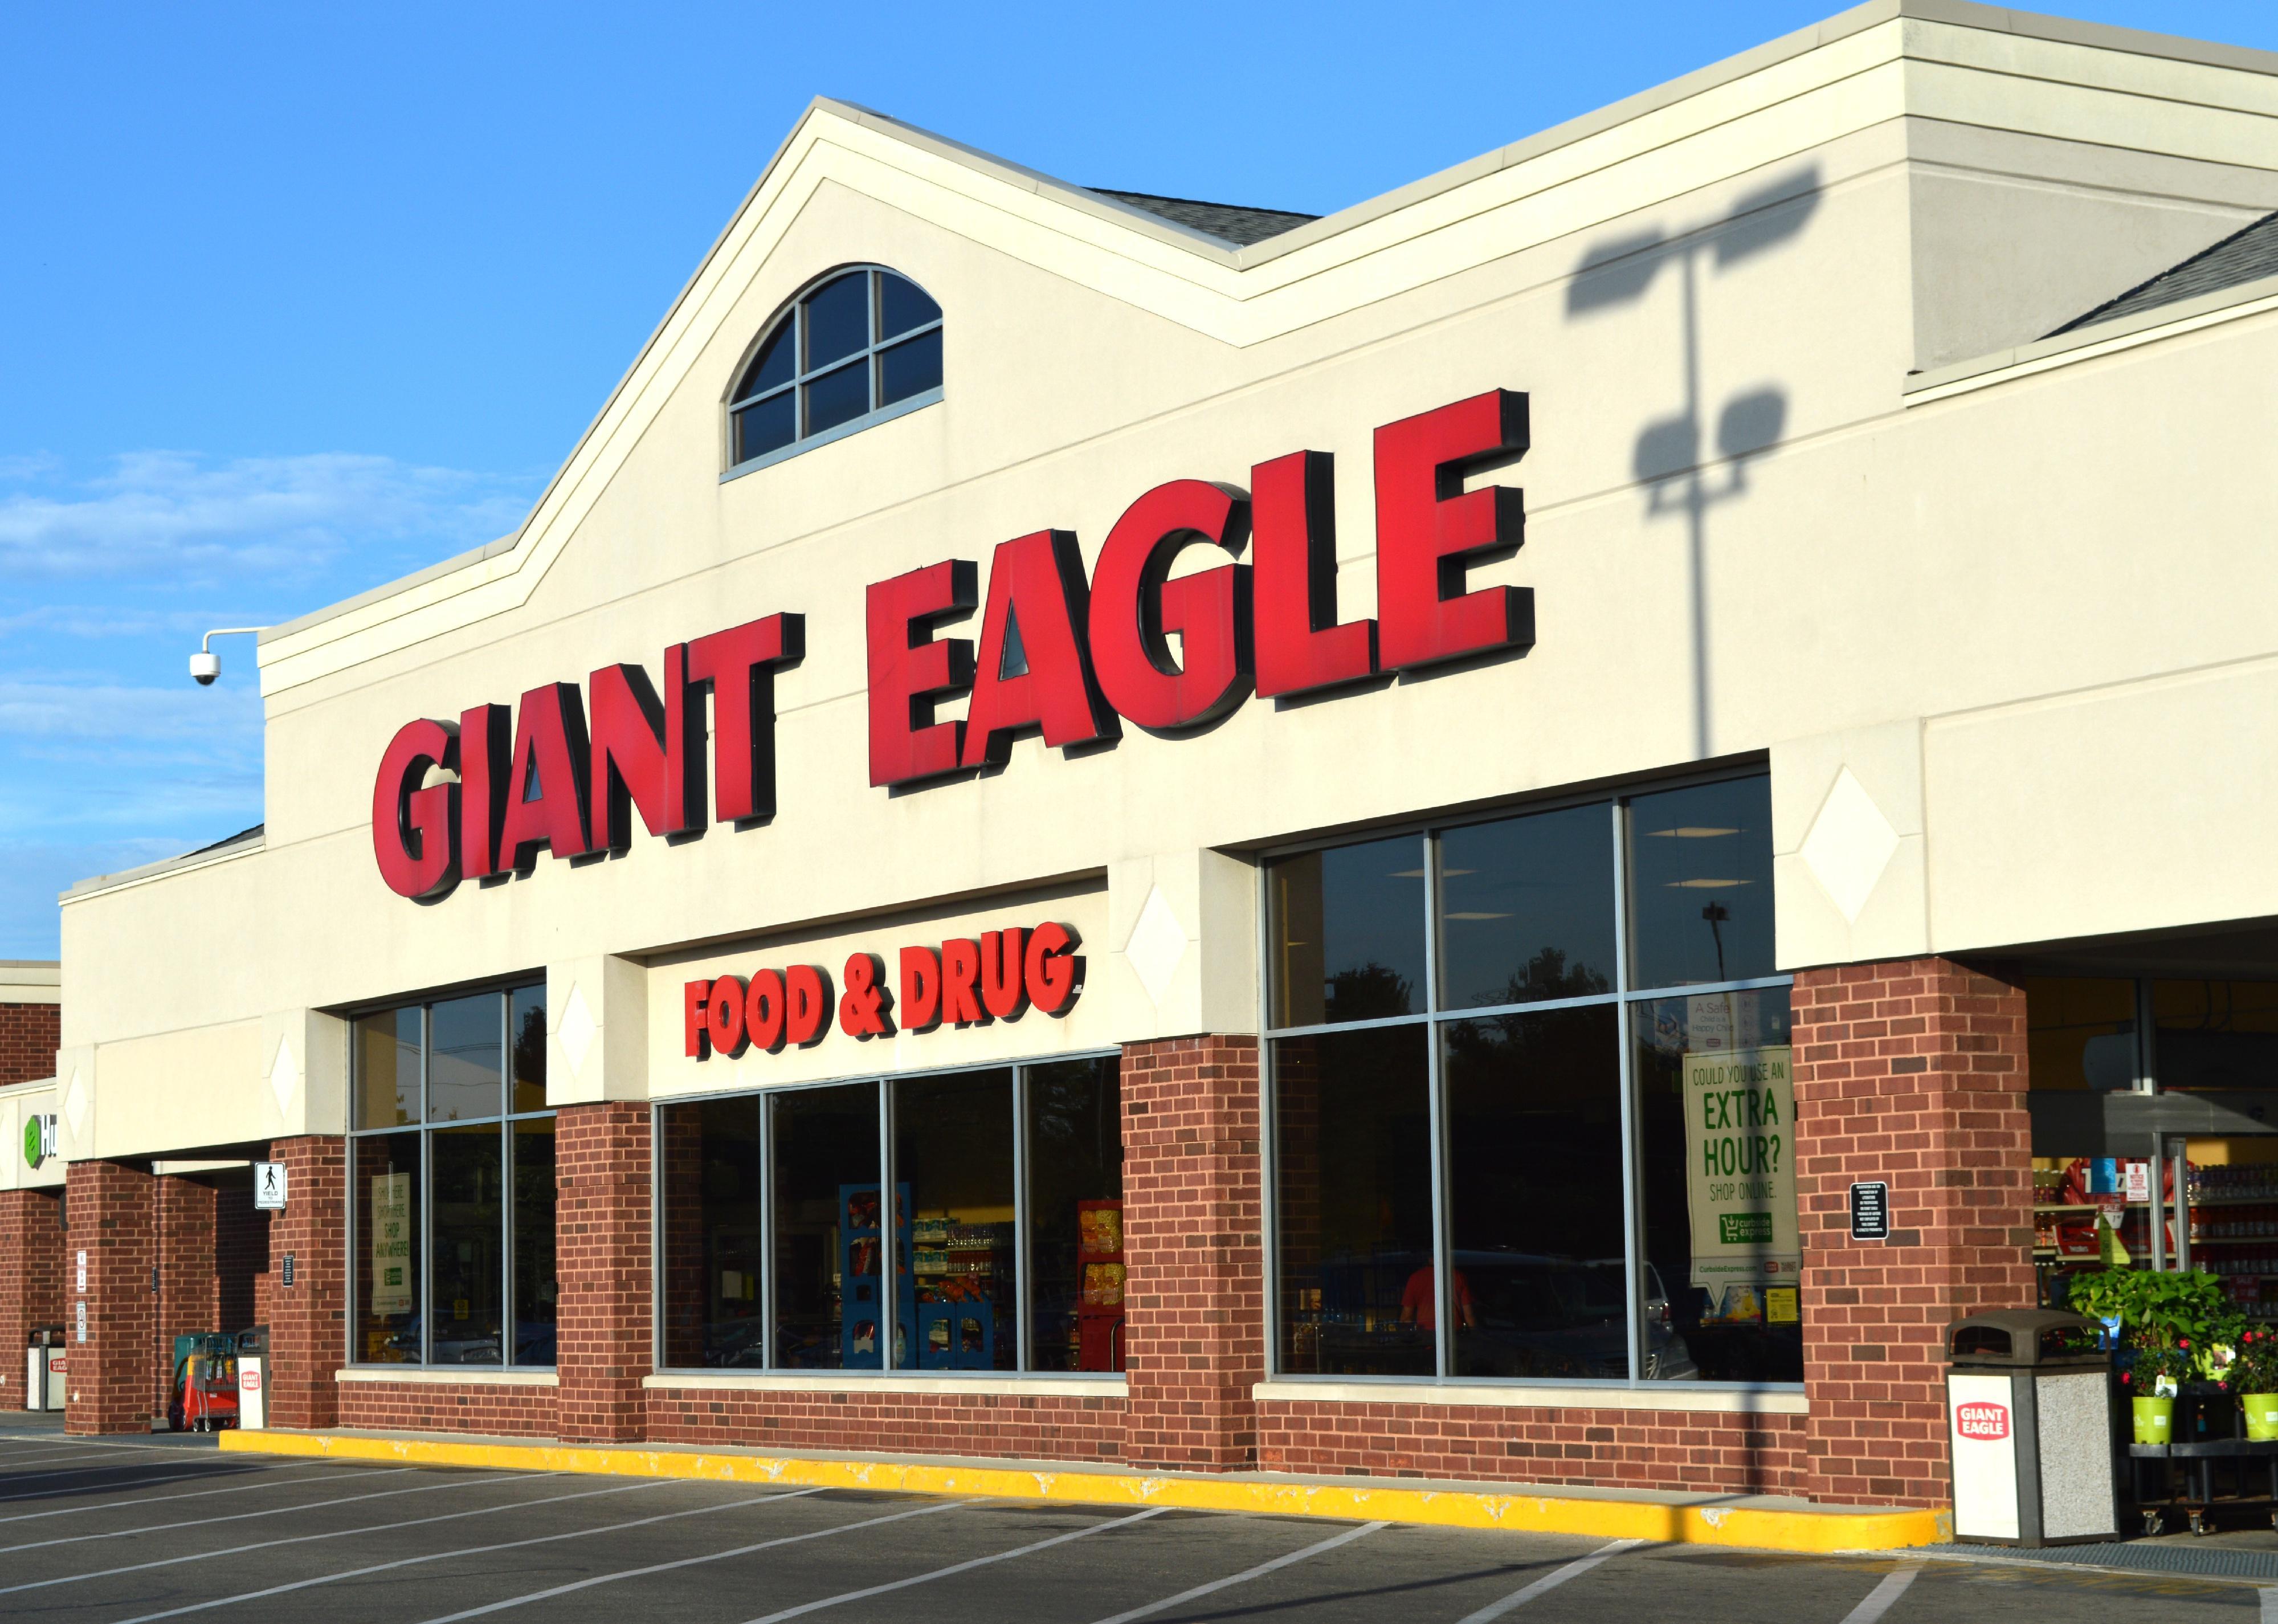 Giant Eagle storefront.